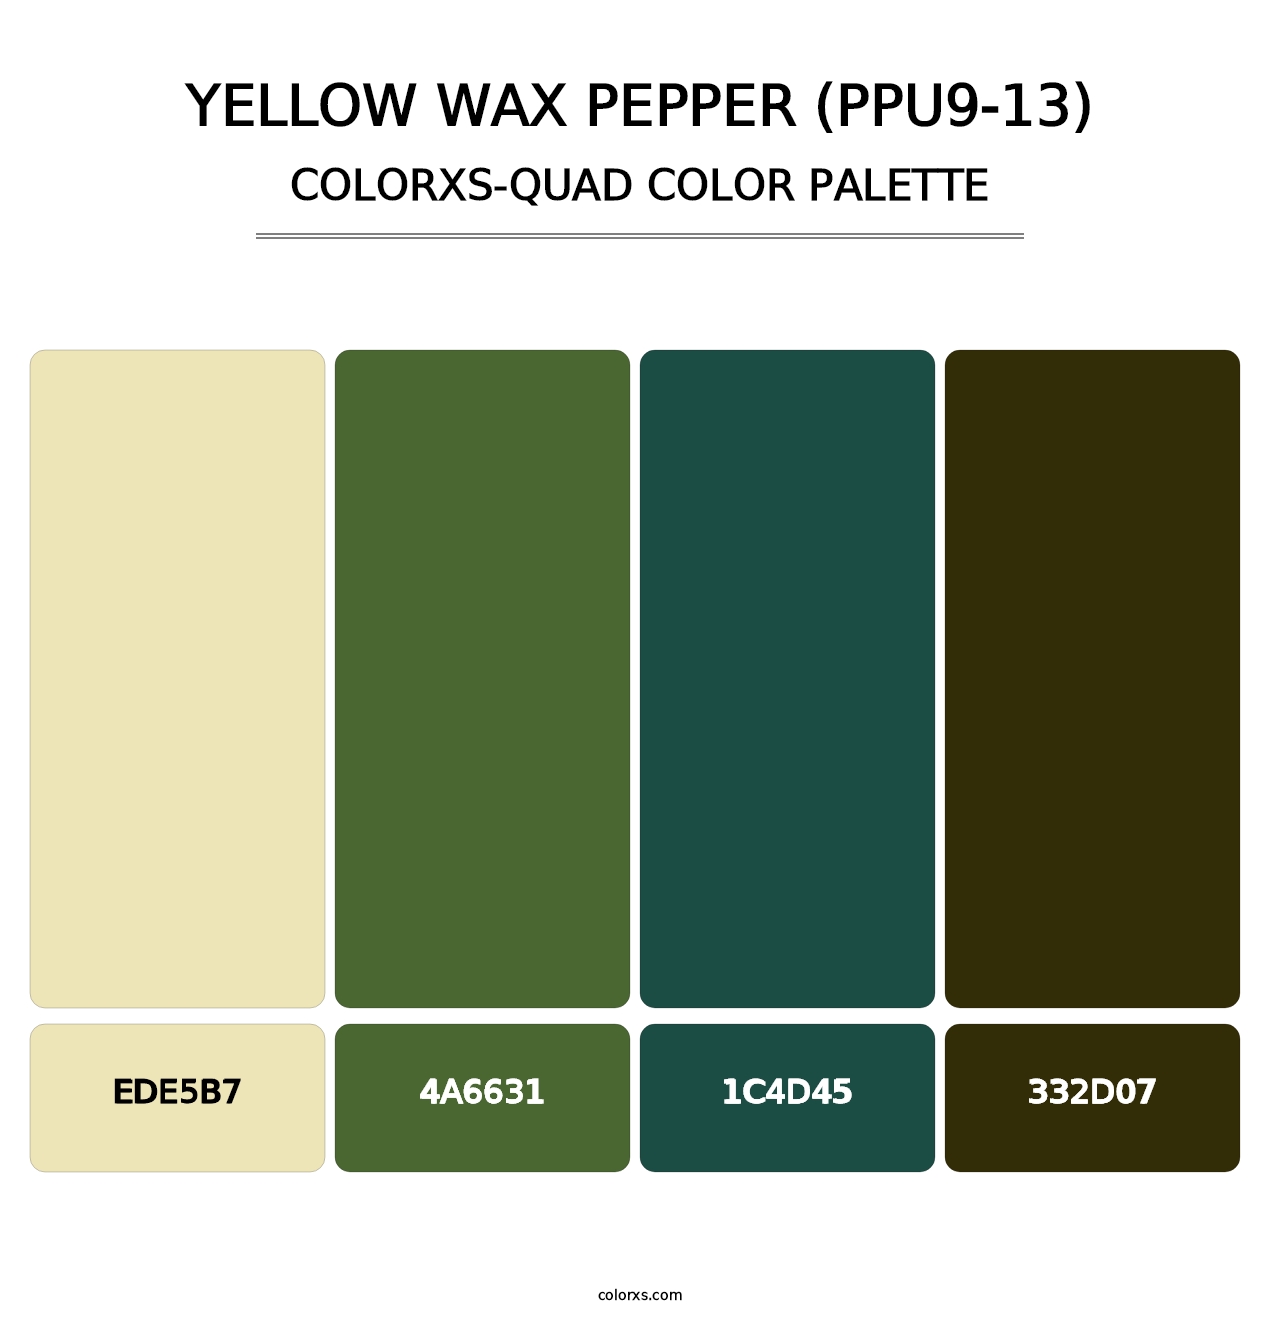 Yellow Wax Pepper (PPU9-13) - Colorxs Quad Palette